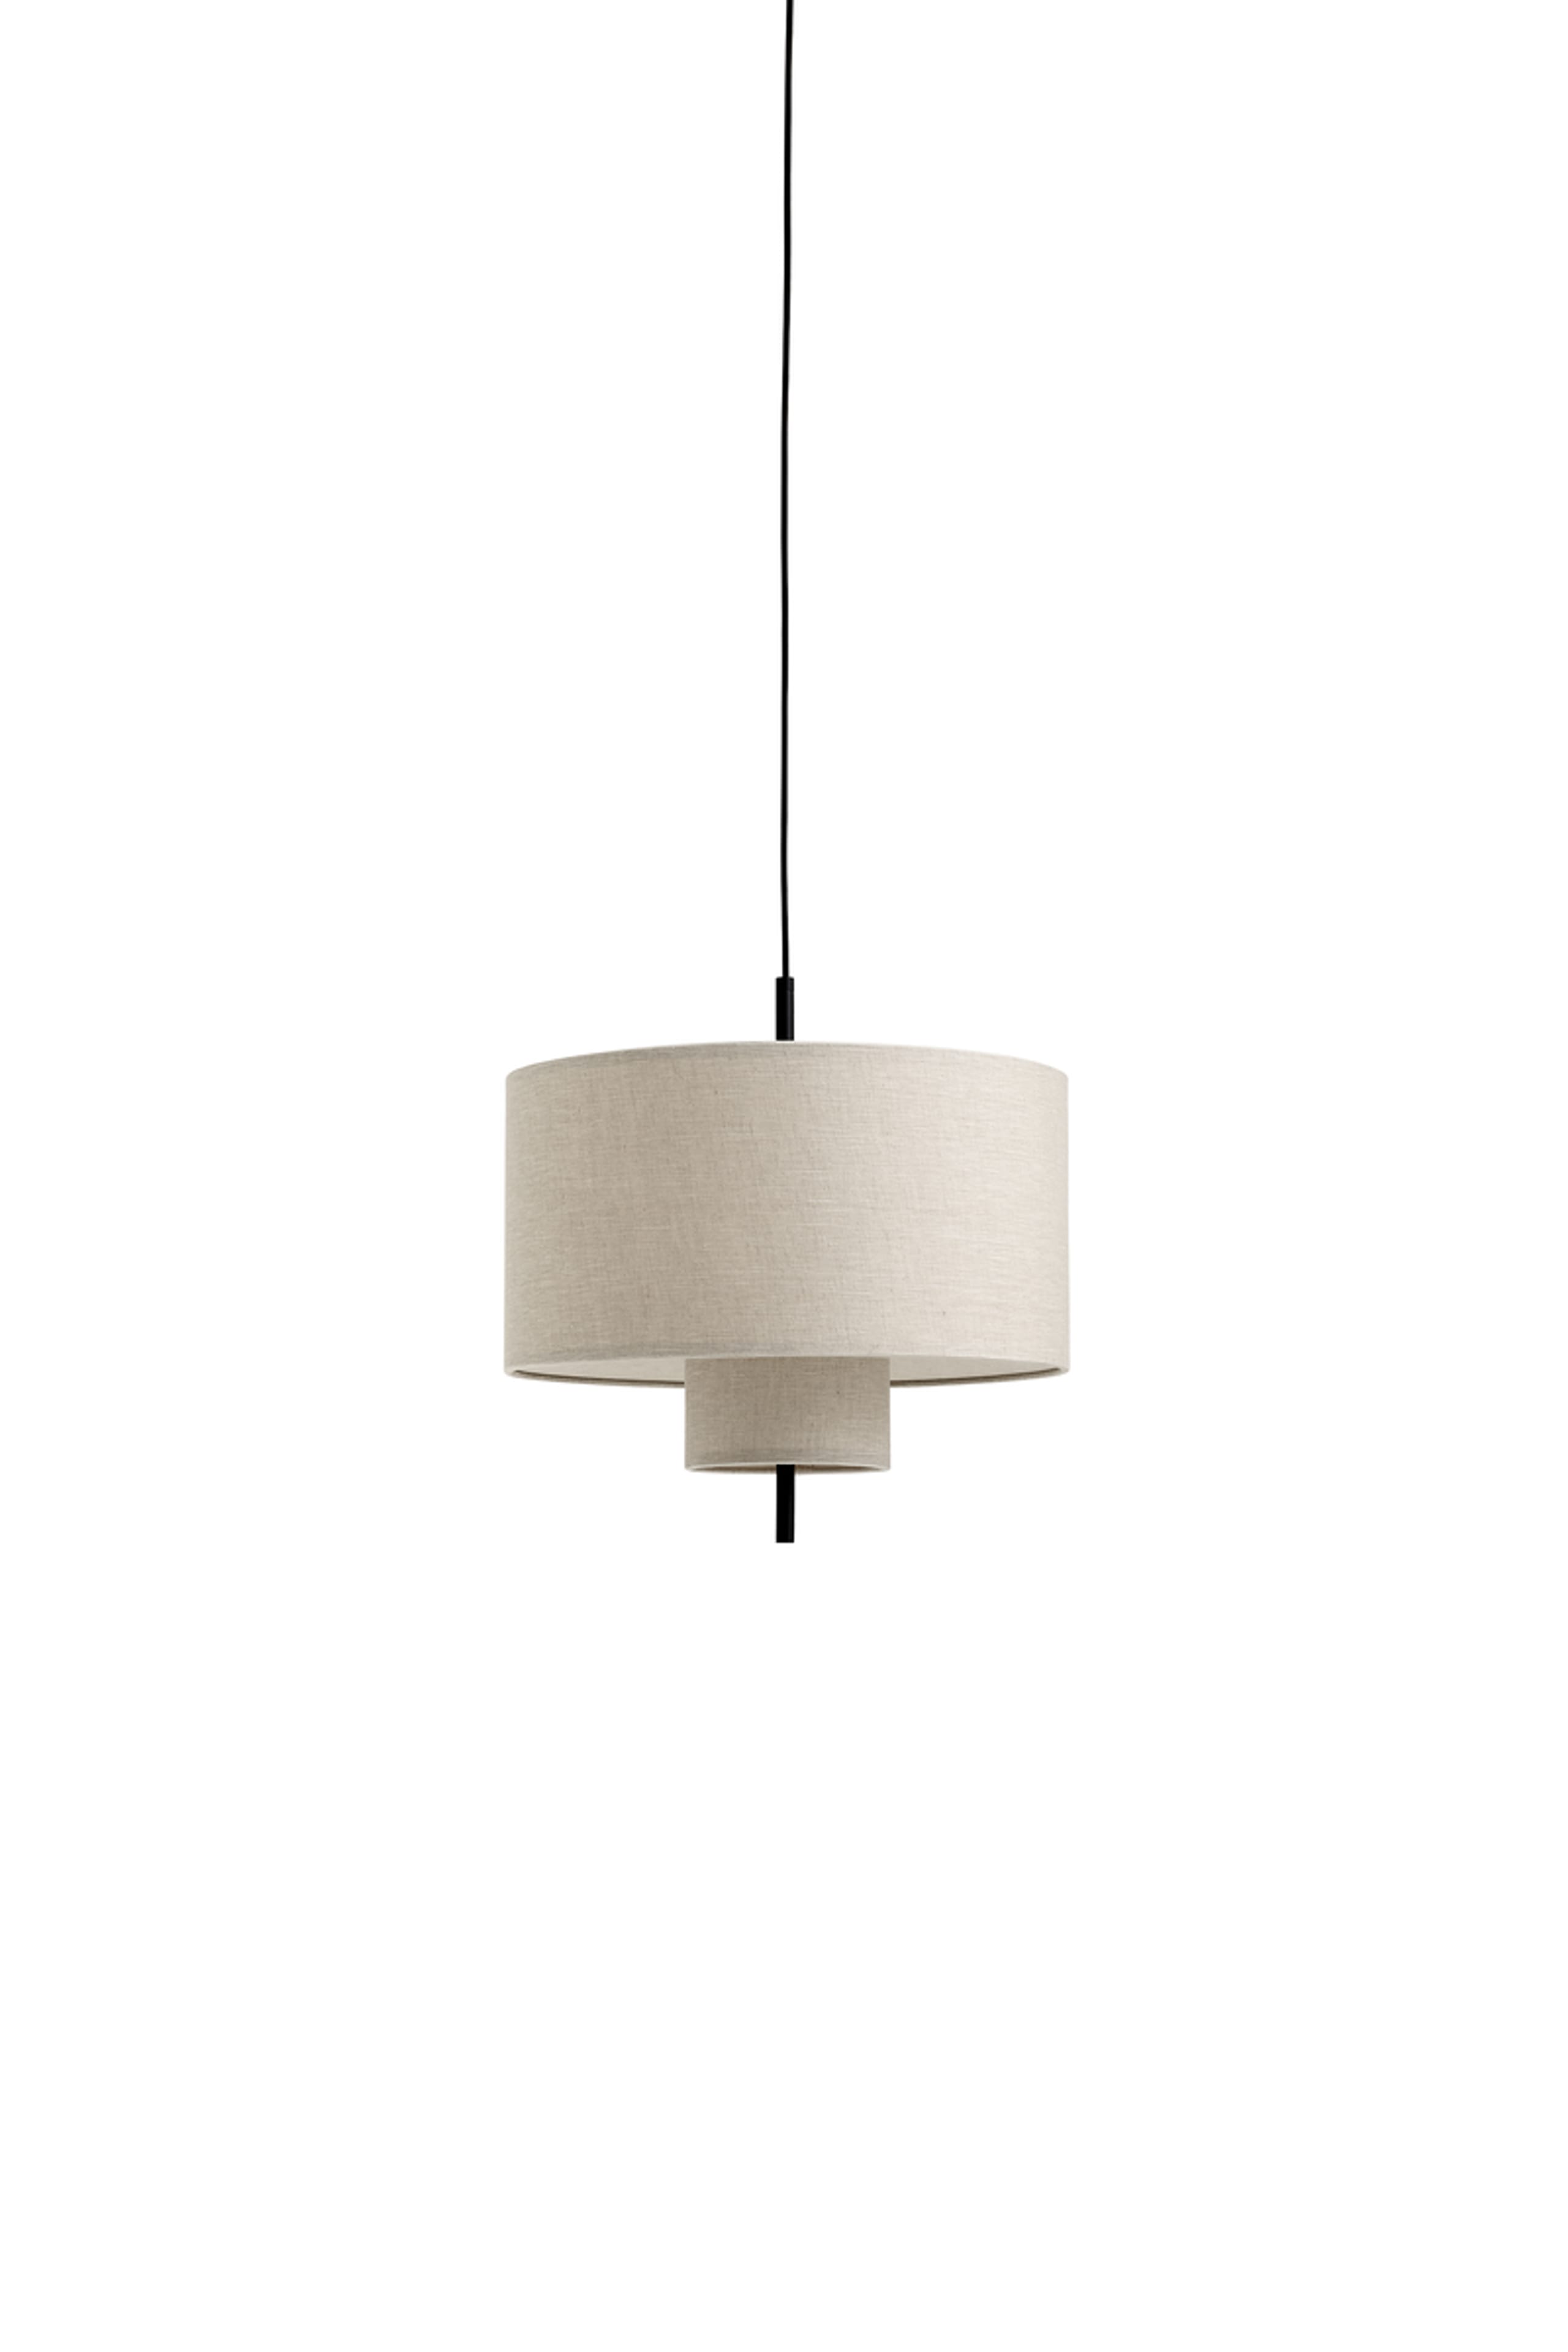 New Works - Lampe - Margin pendant lamp - Beige - Ø50